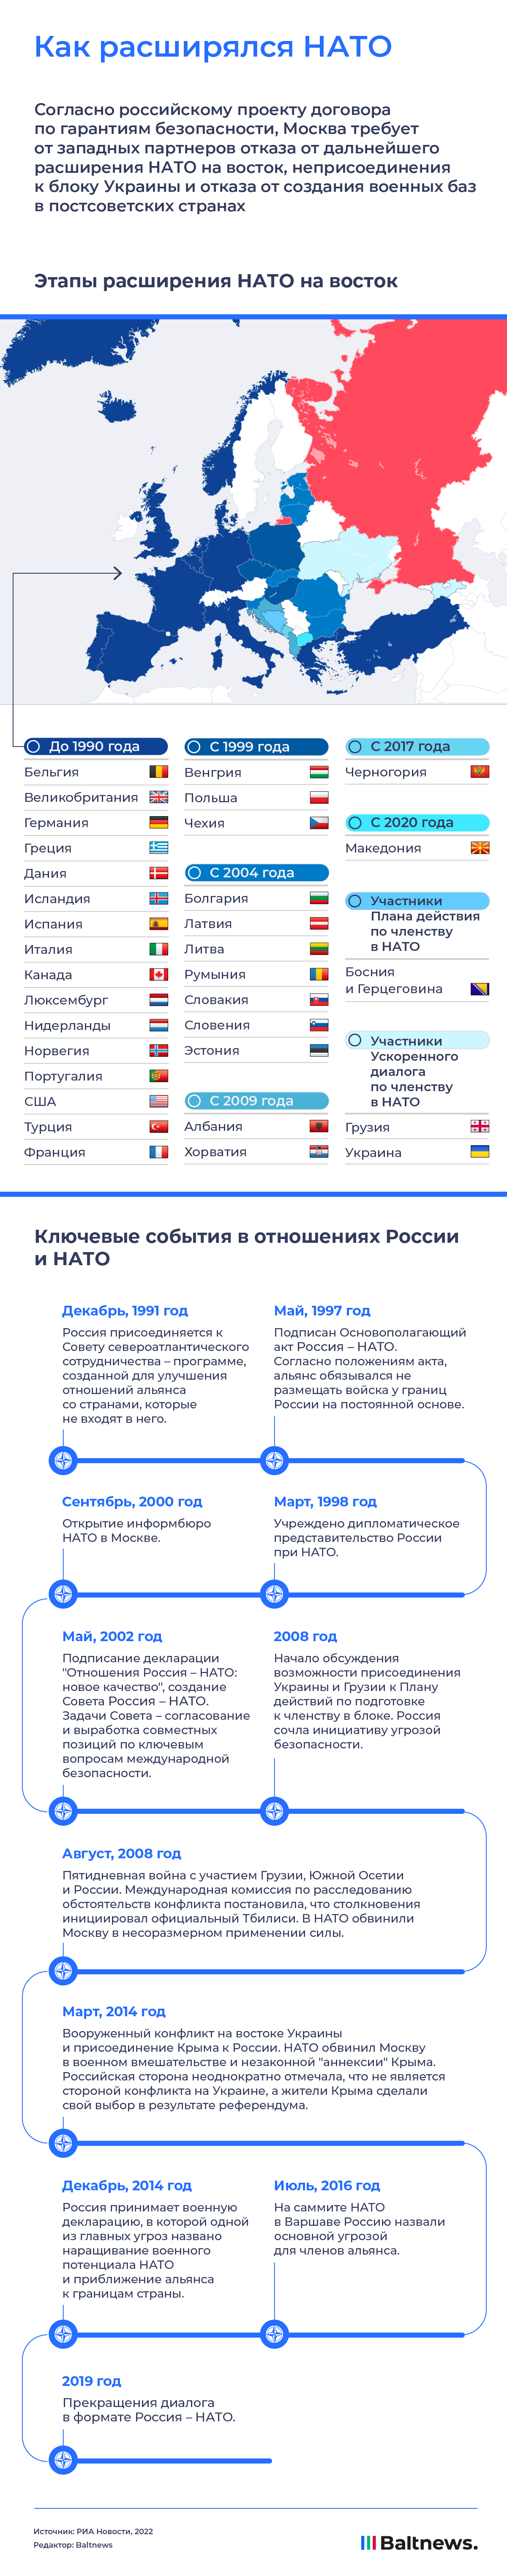 Как расширялся НАТО